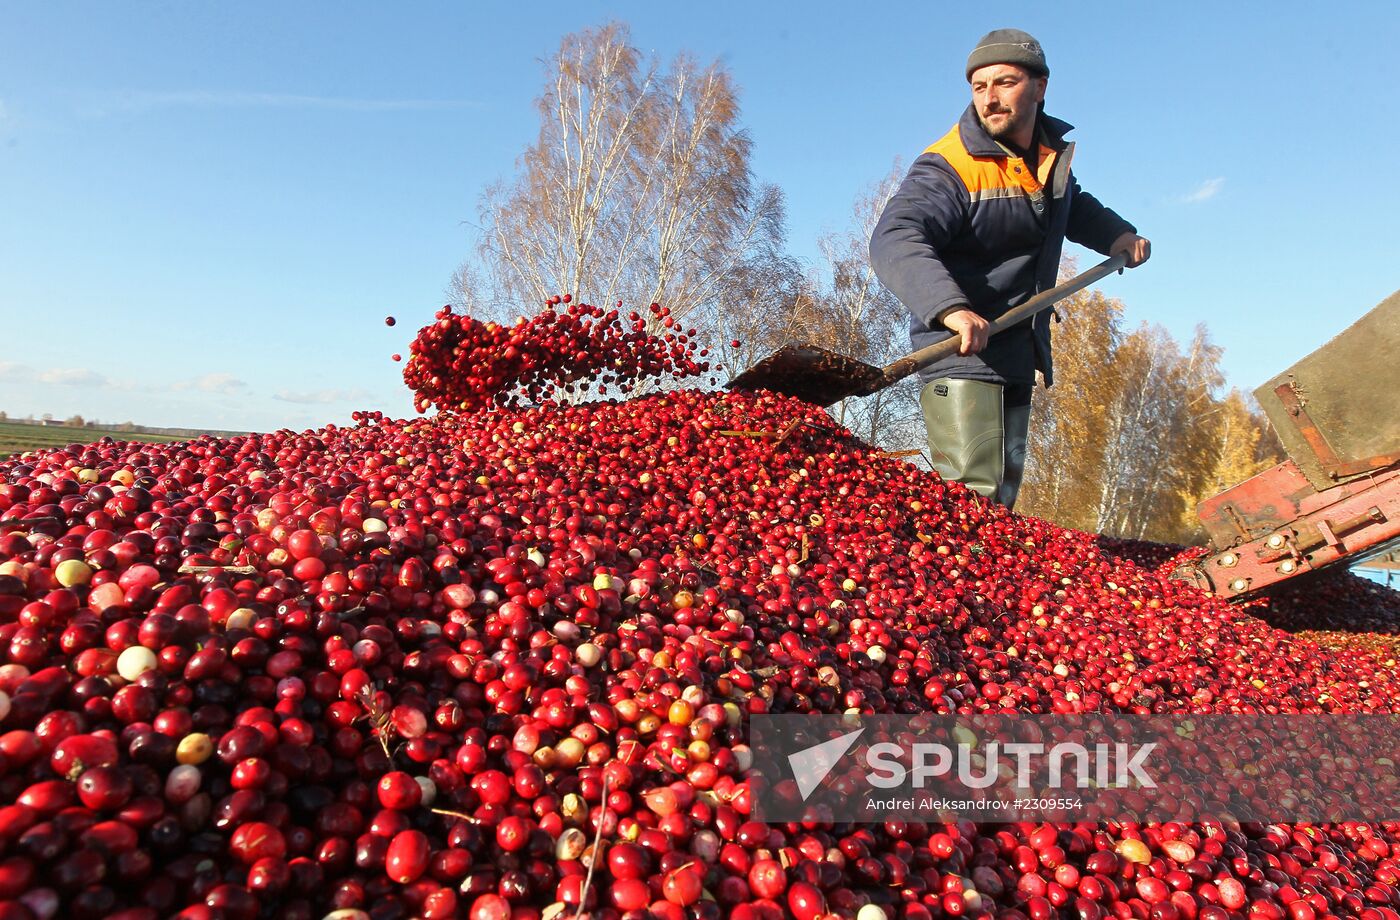 Harvesting cranberries at Belarusian Zhuravin enterprise